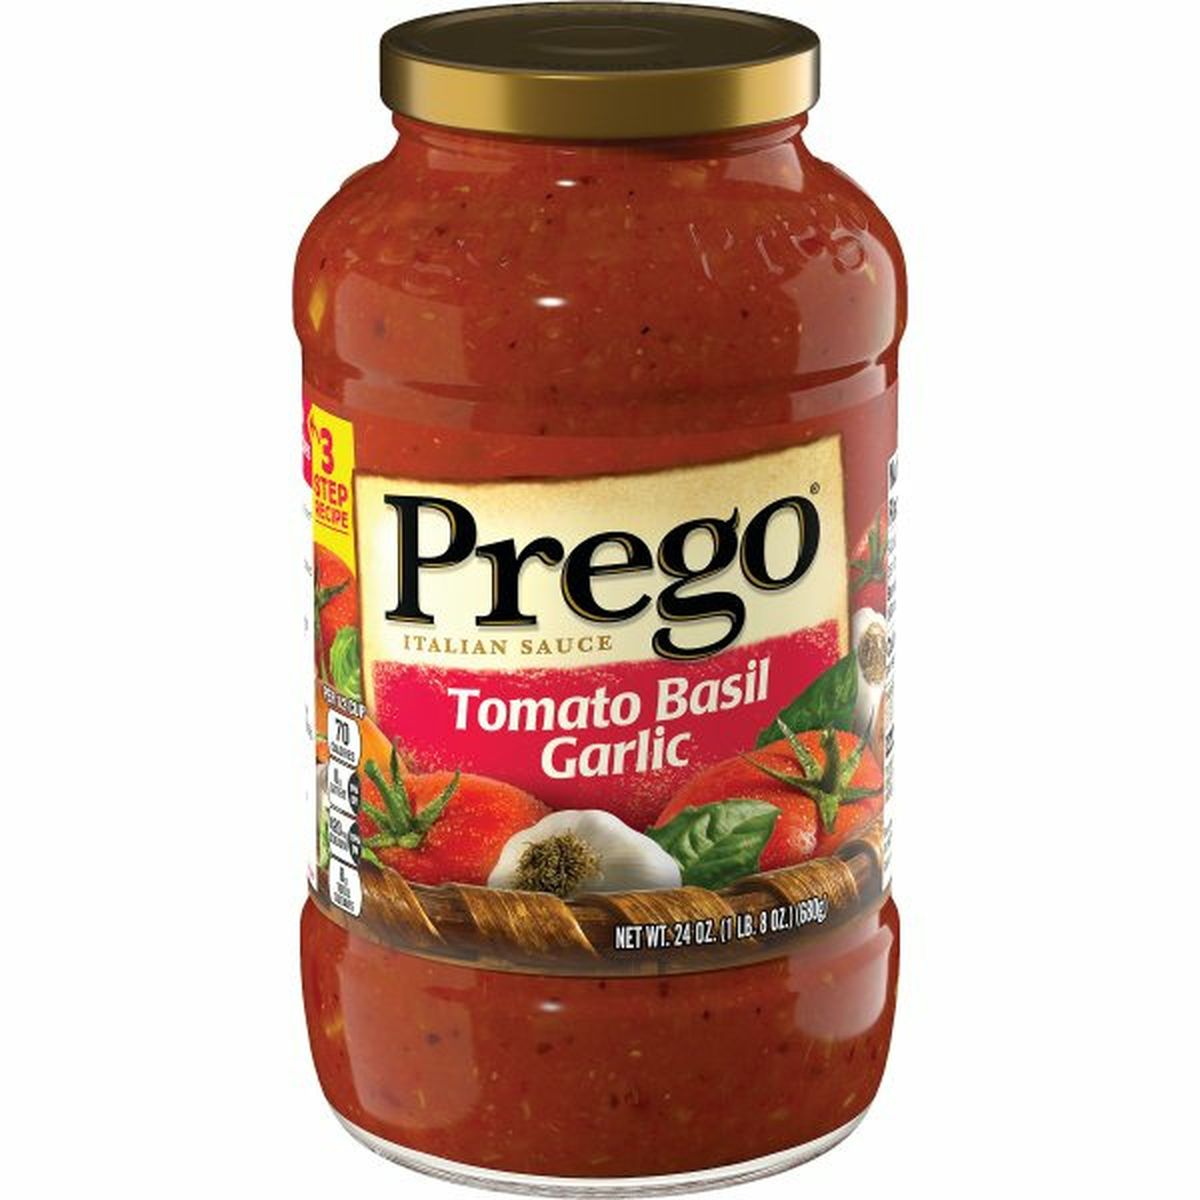 Calories in Pregos Tomato Basil Garlic Italian Sauce